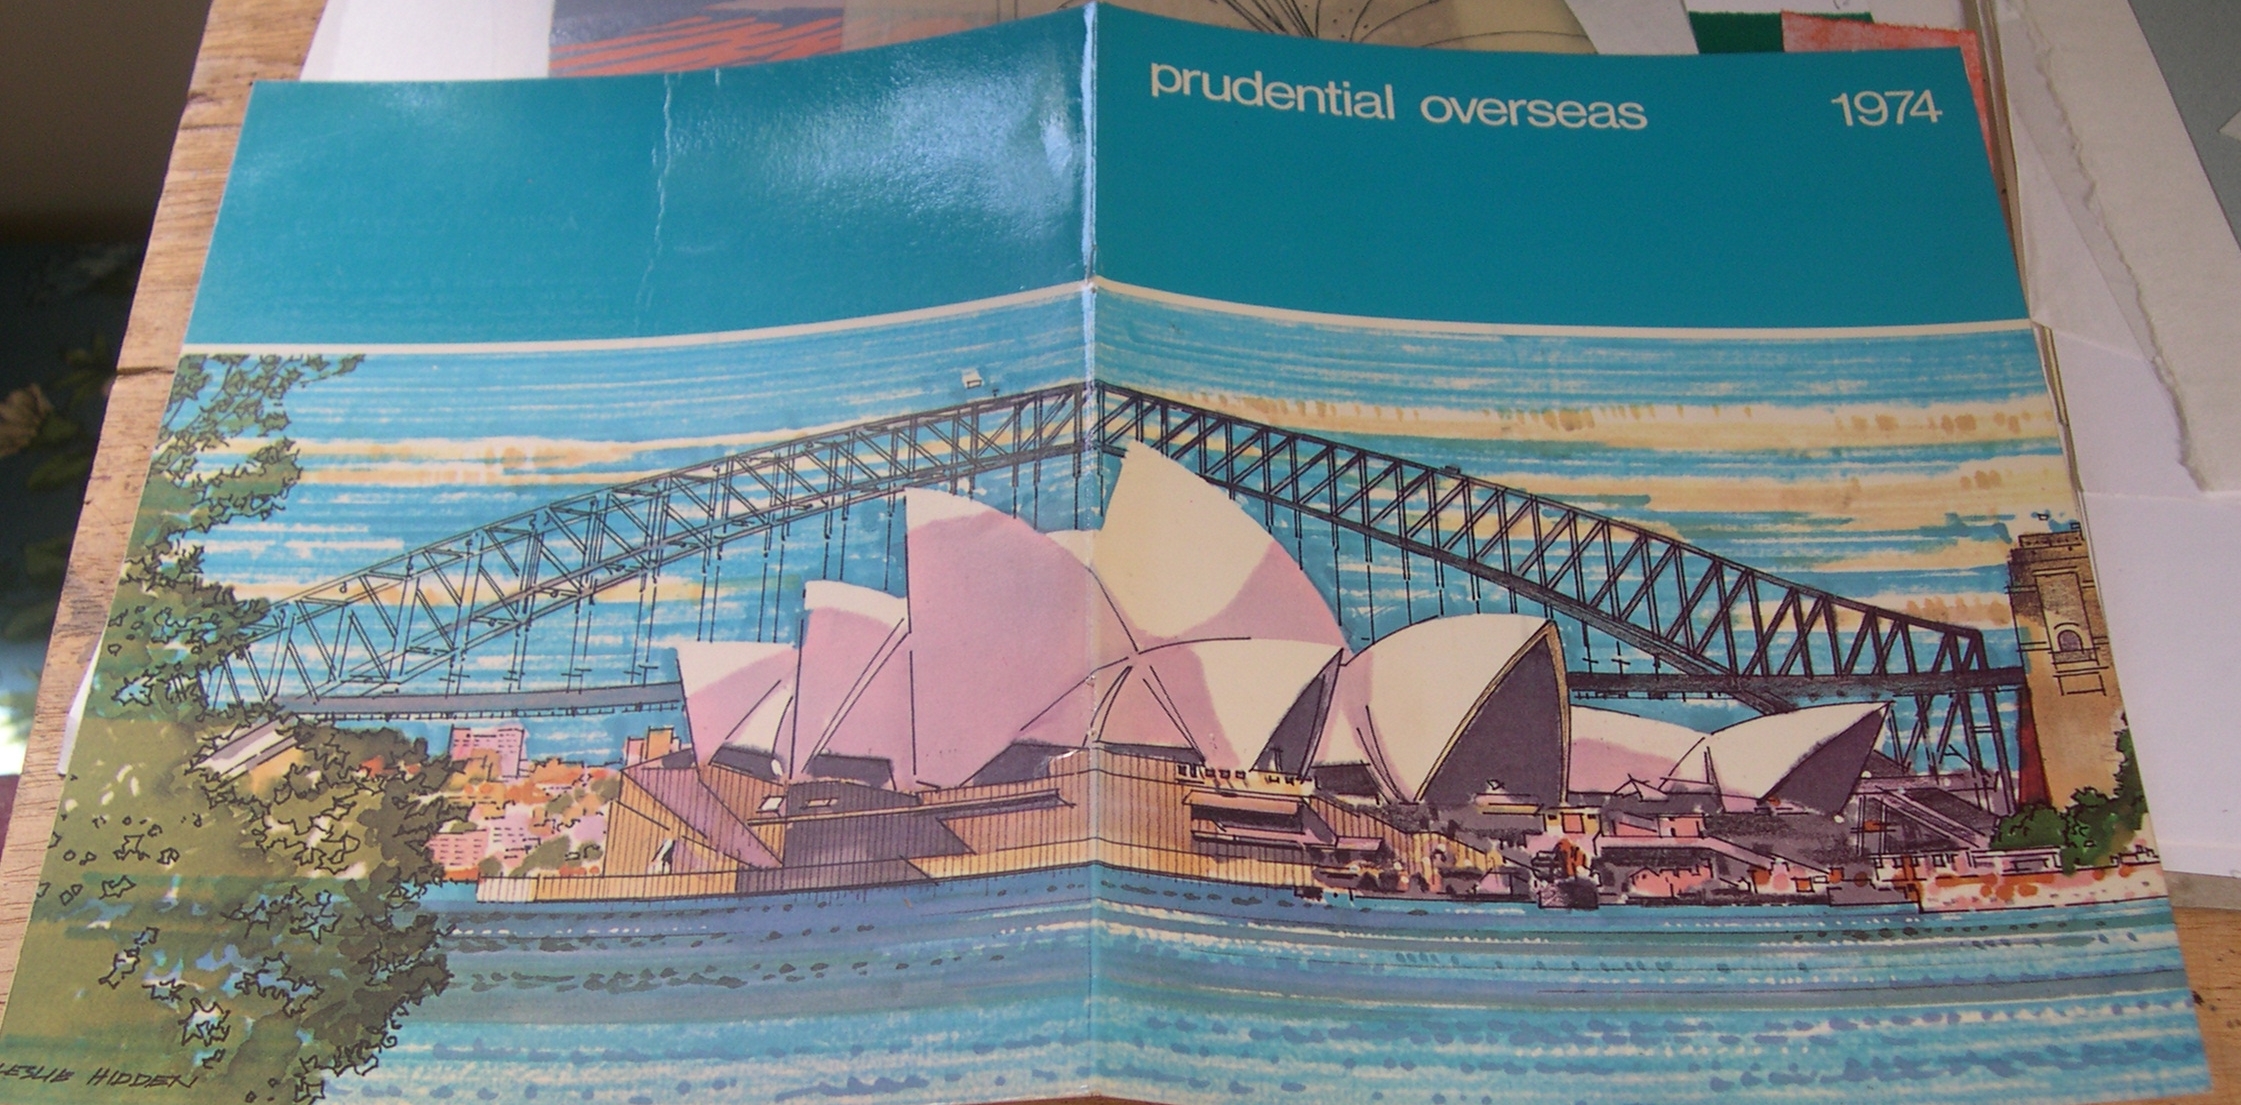 Leslie Hidden commercial art Prudential brochure of image of Sydney Harbour & image of Sydney Opera House